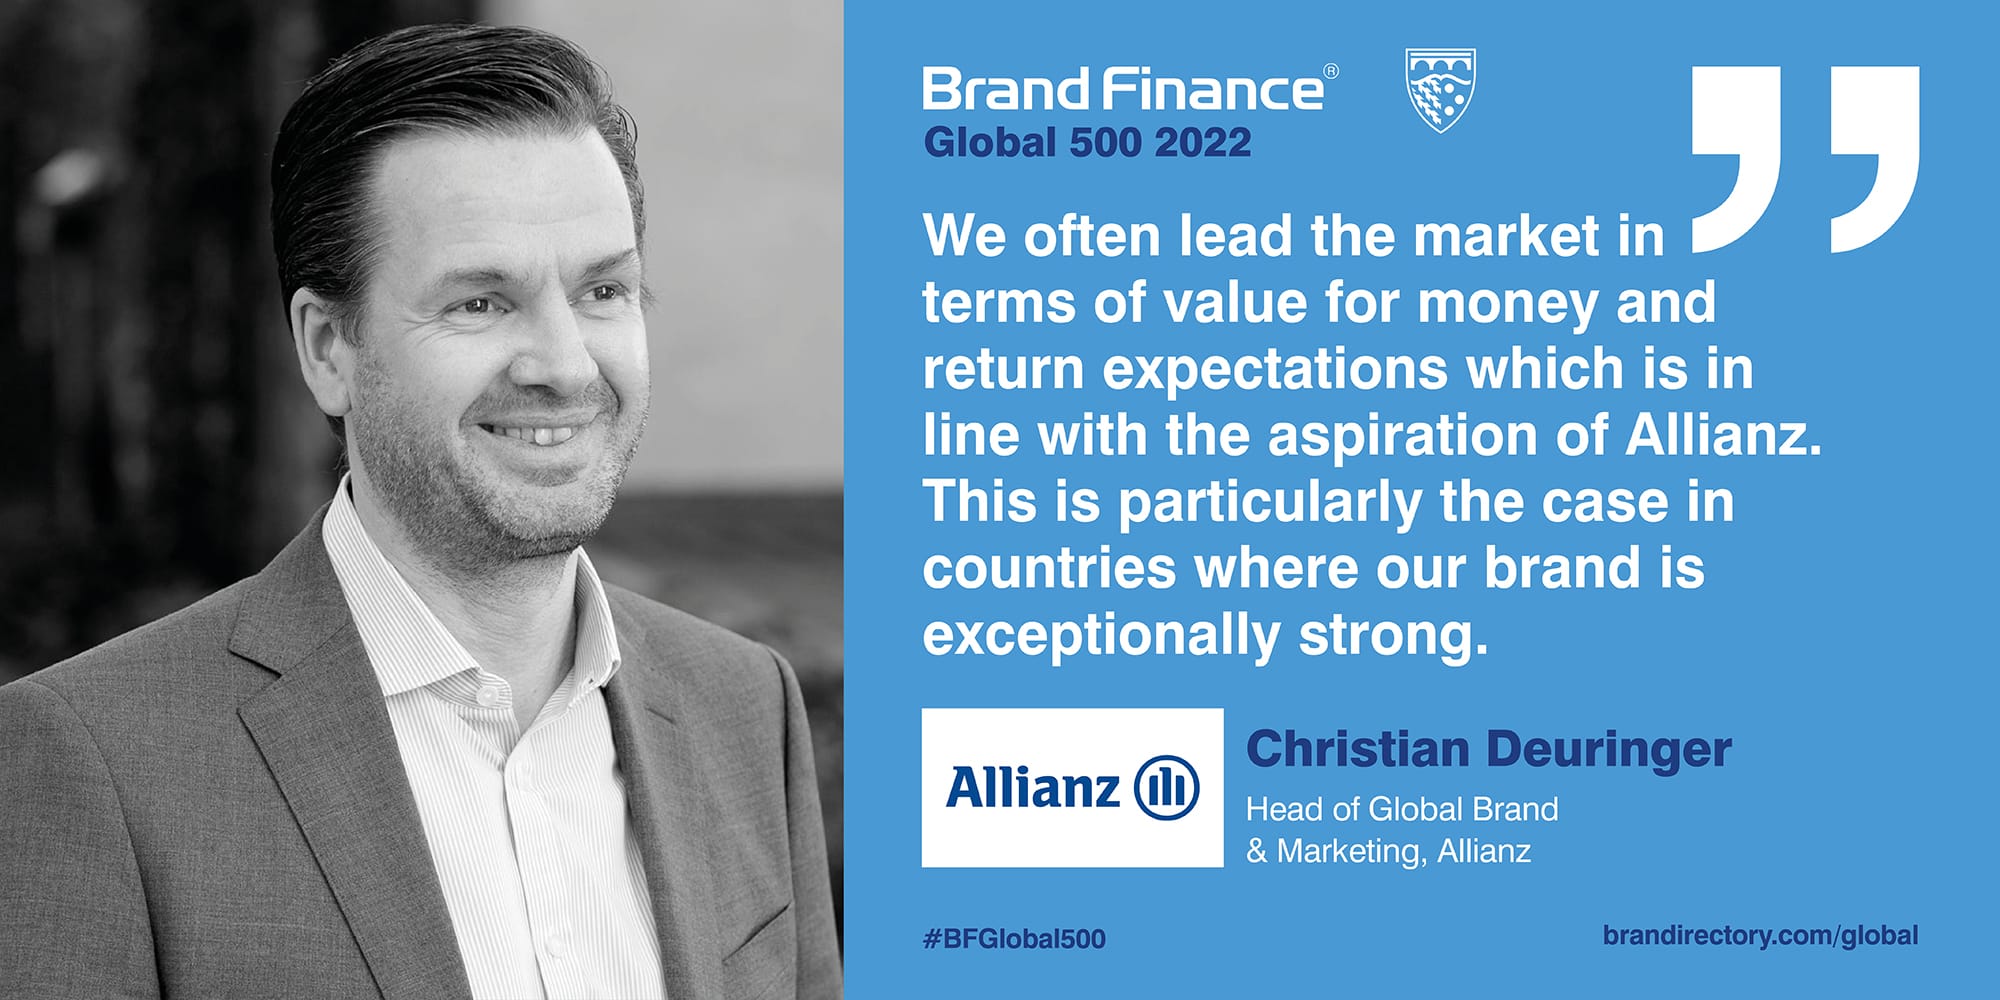 Christian Deuringer, Head of Global Brand & Marketing, Allianz